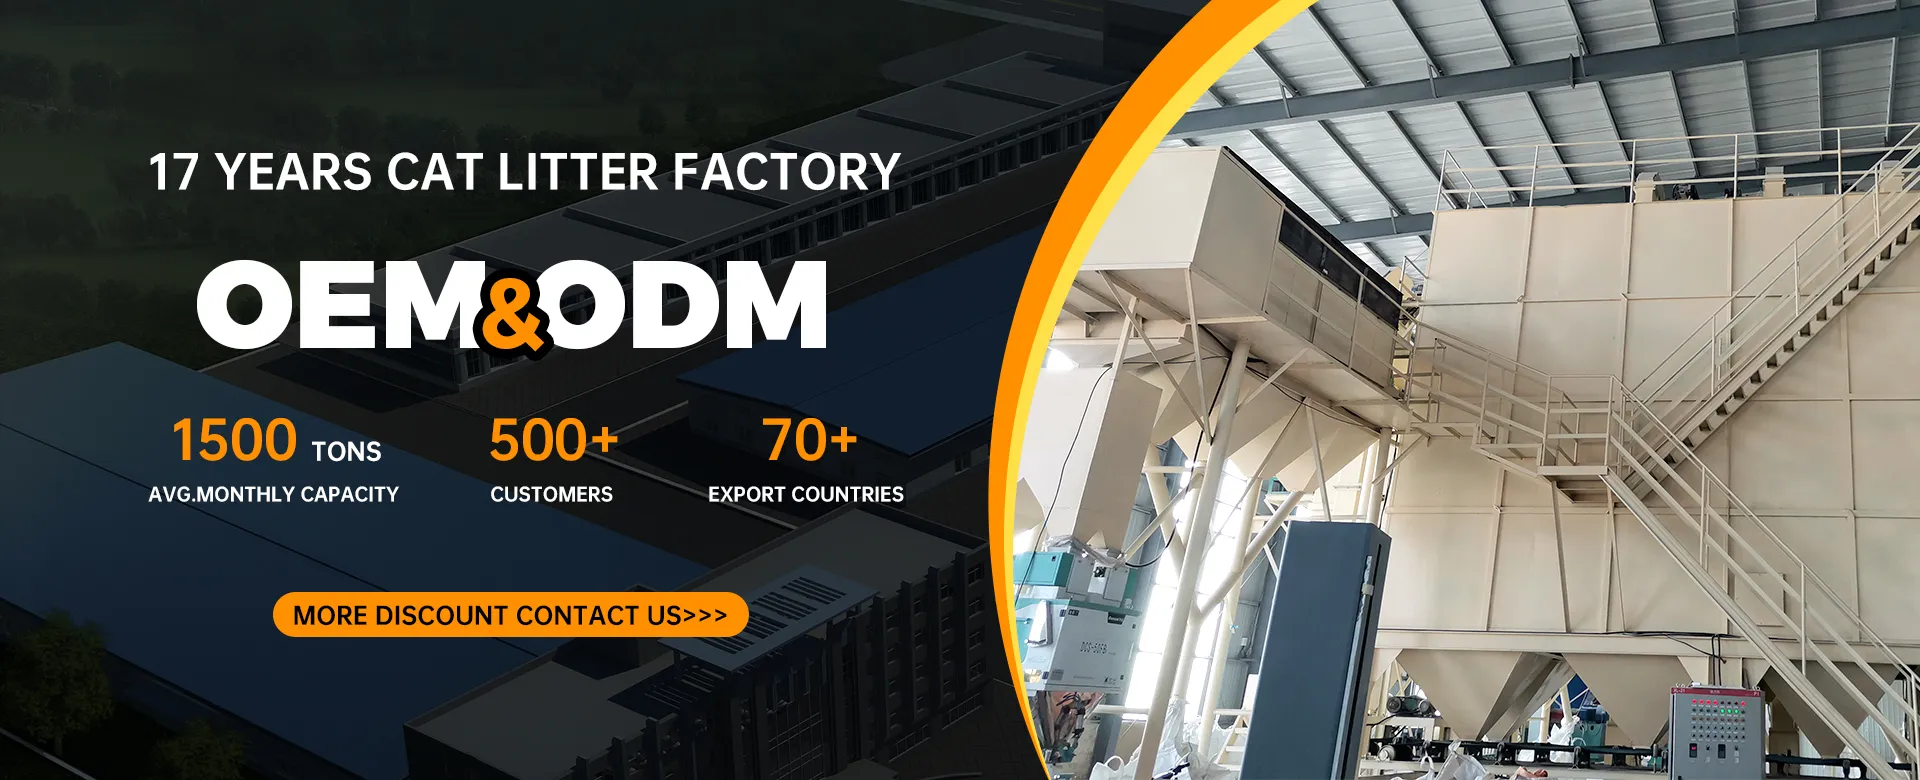 OEM & ODM Cat Factory